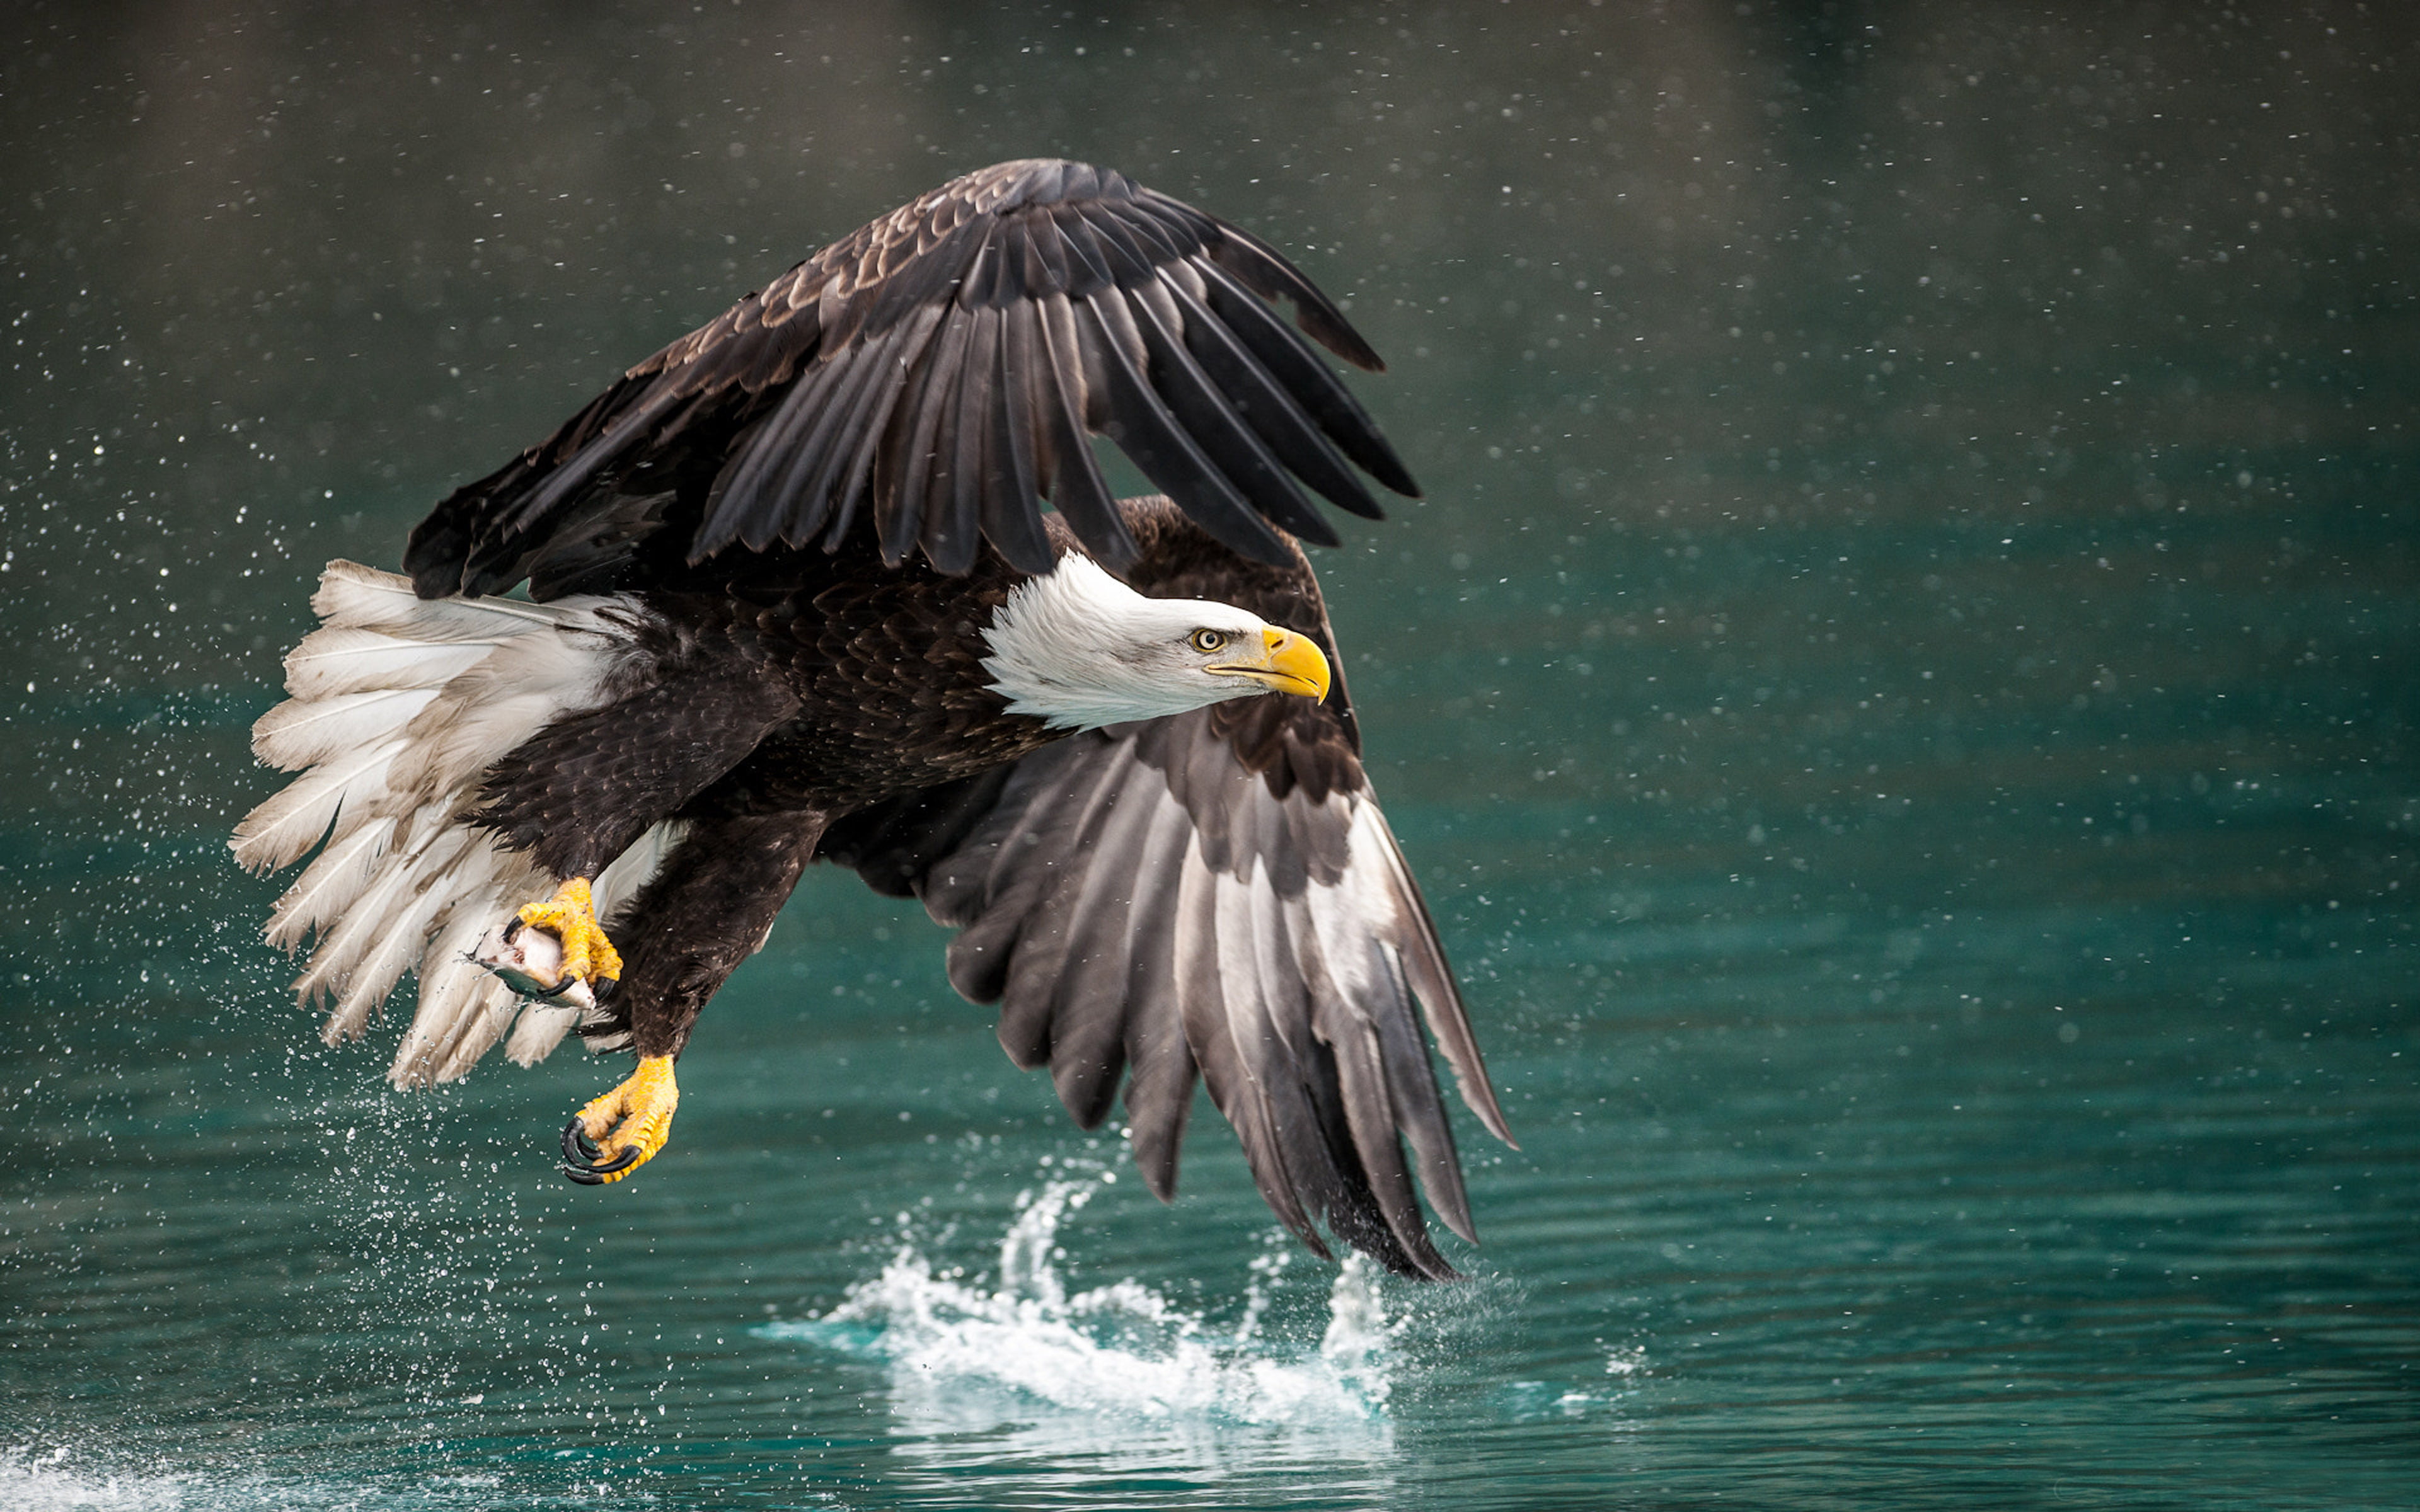 Bird Bald Eagle Fantastic Catch Hunting In Flight Winter In Alaska Desktop Hd Wallpaper For Mobile Phones Tablet And Pc 3840×2400